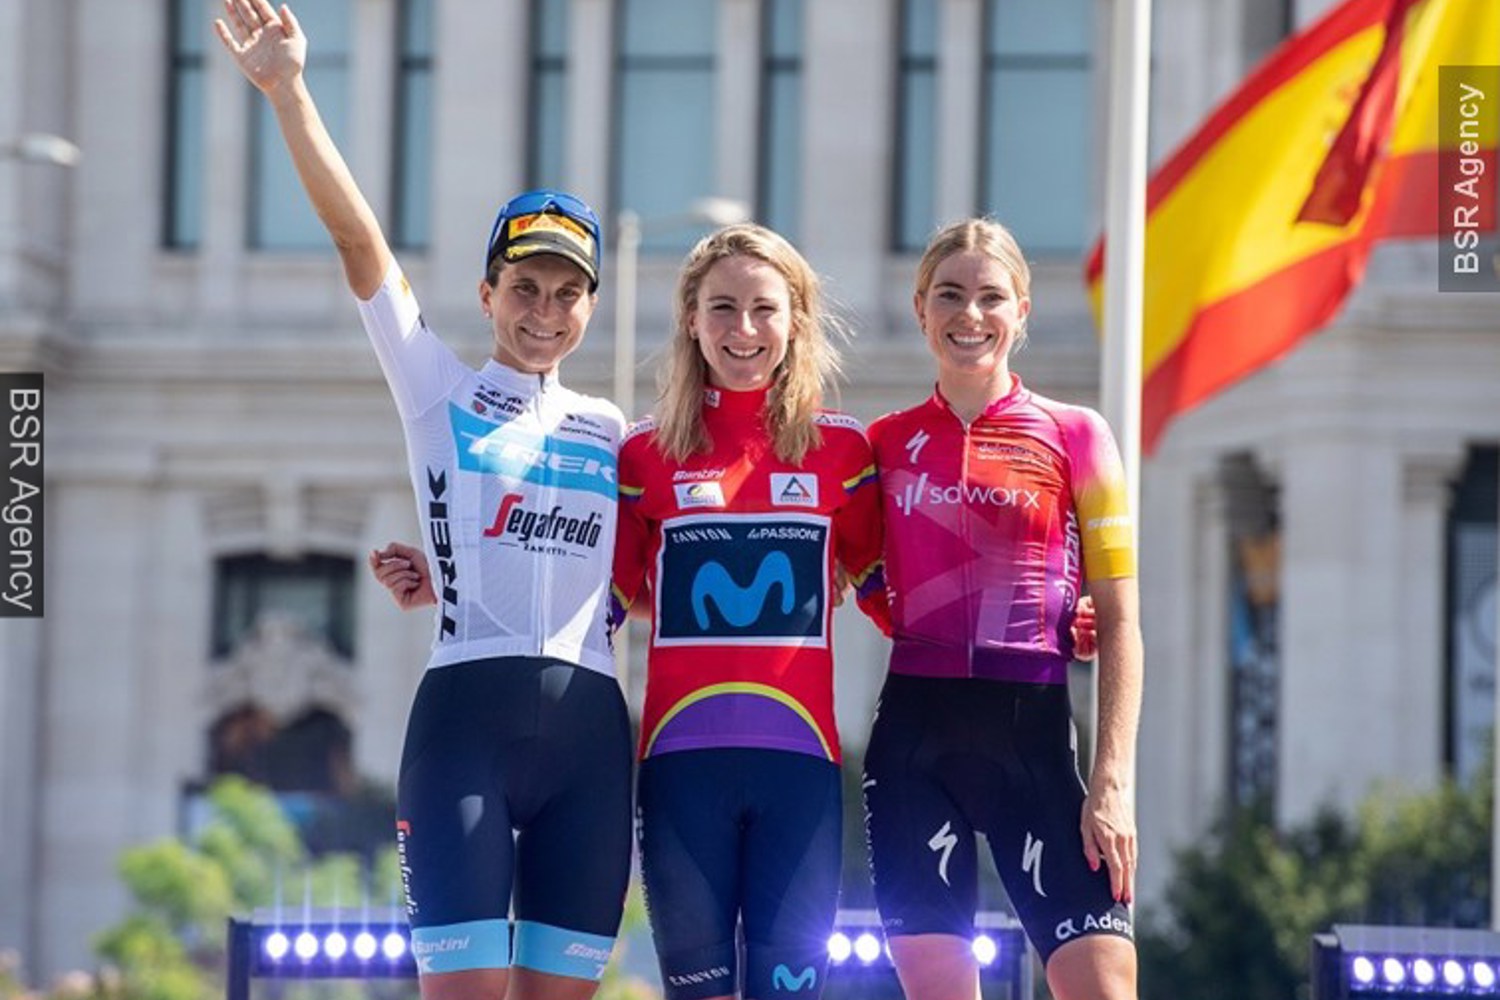 Vuelta Feminina 2022 Longo Borghini Vleuten Vollering BSR AGENCY